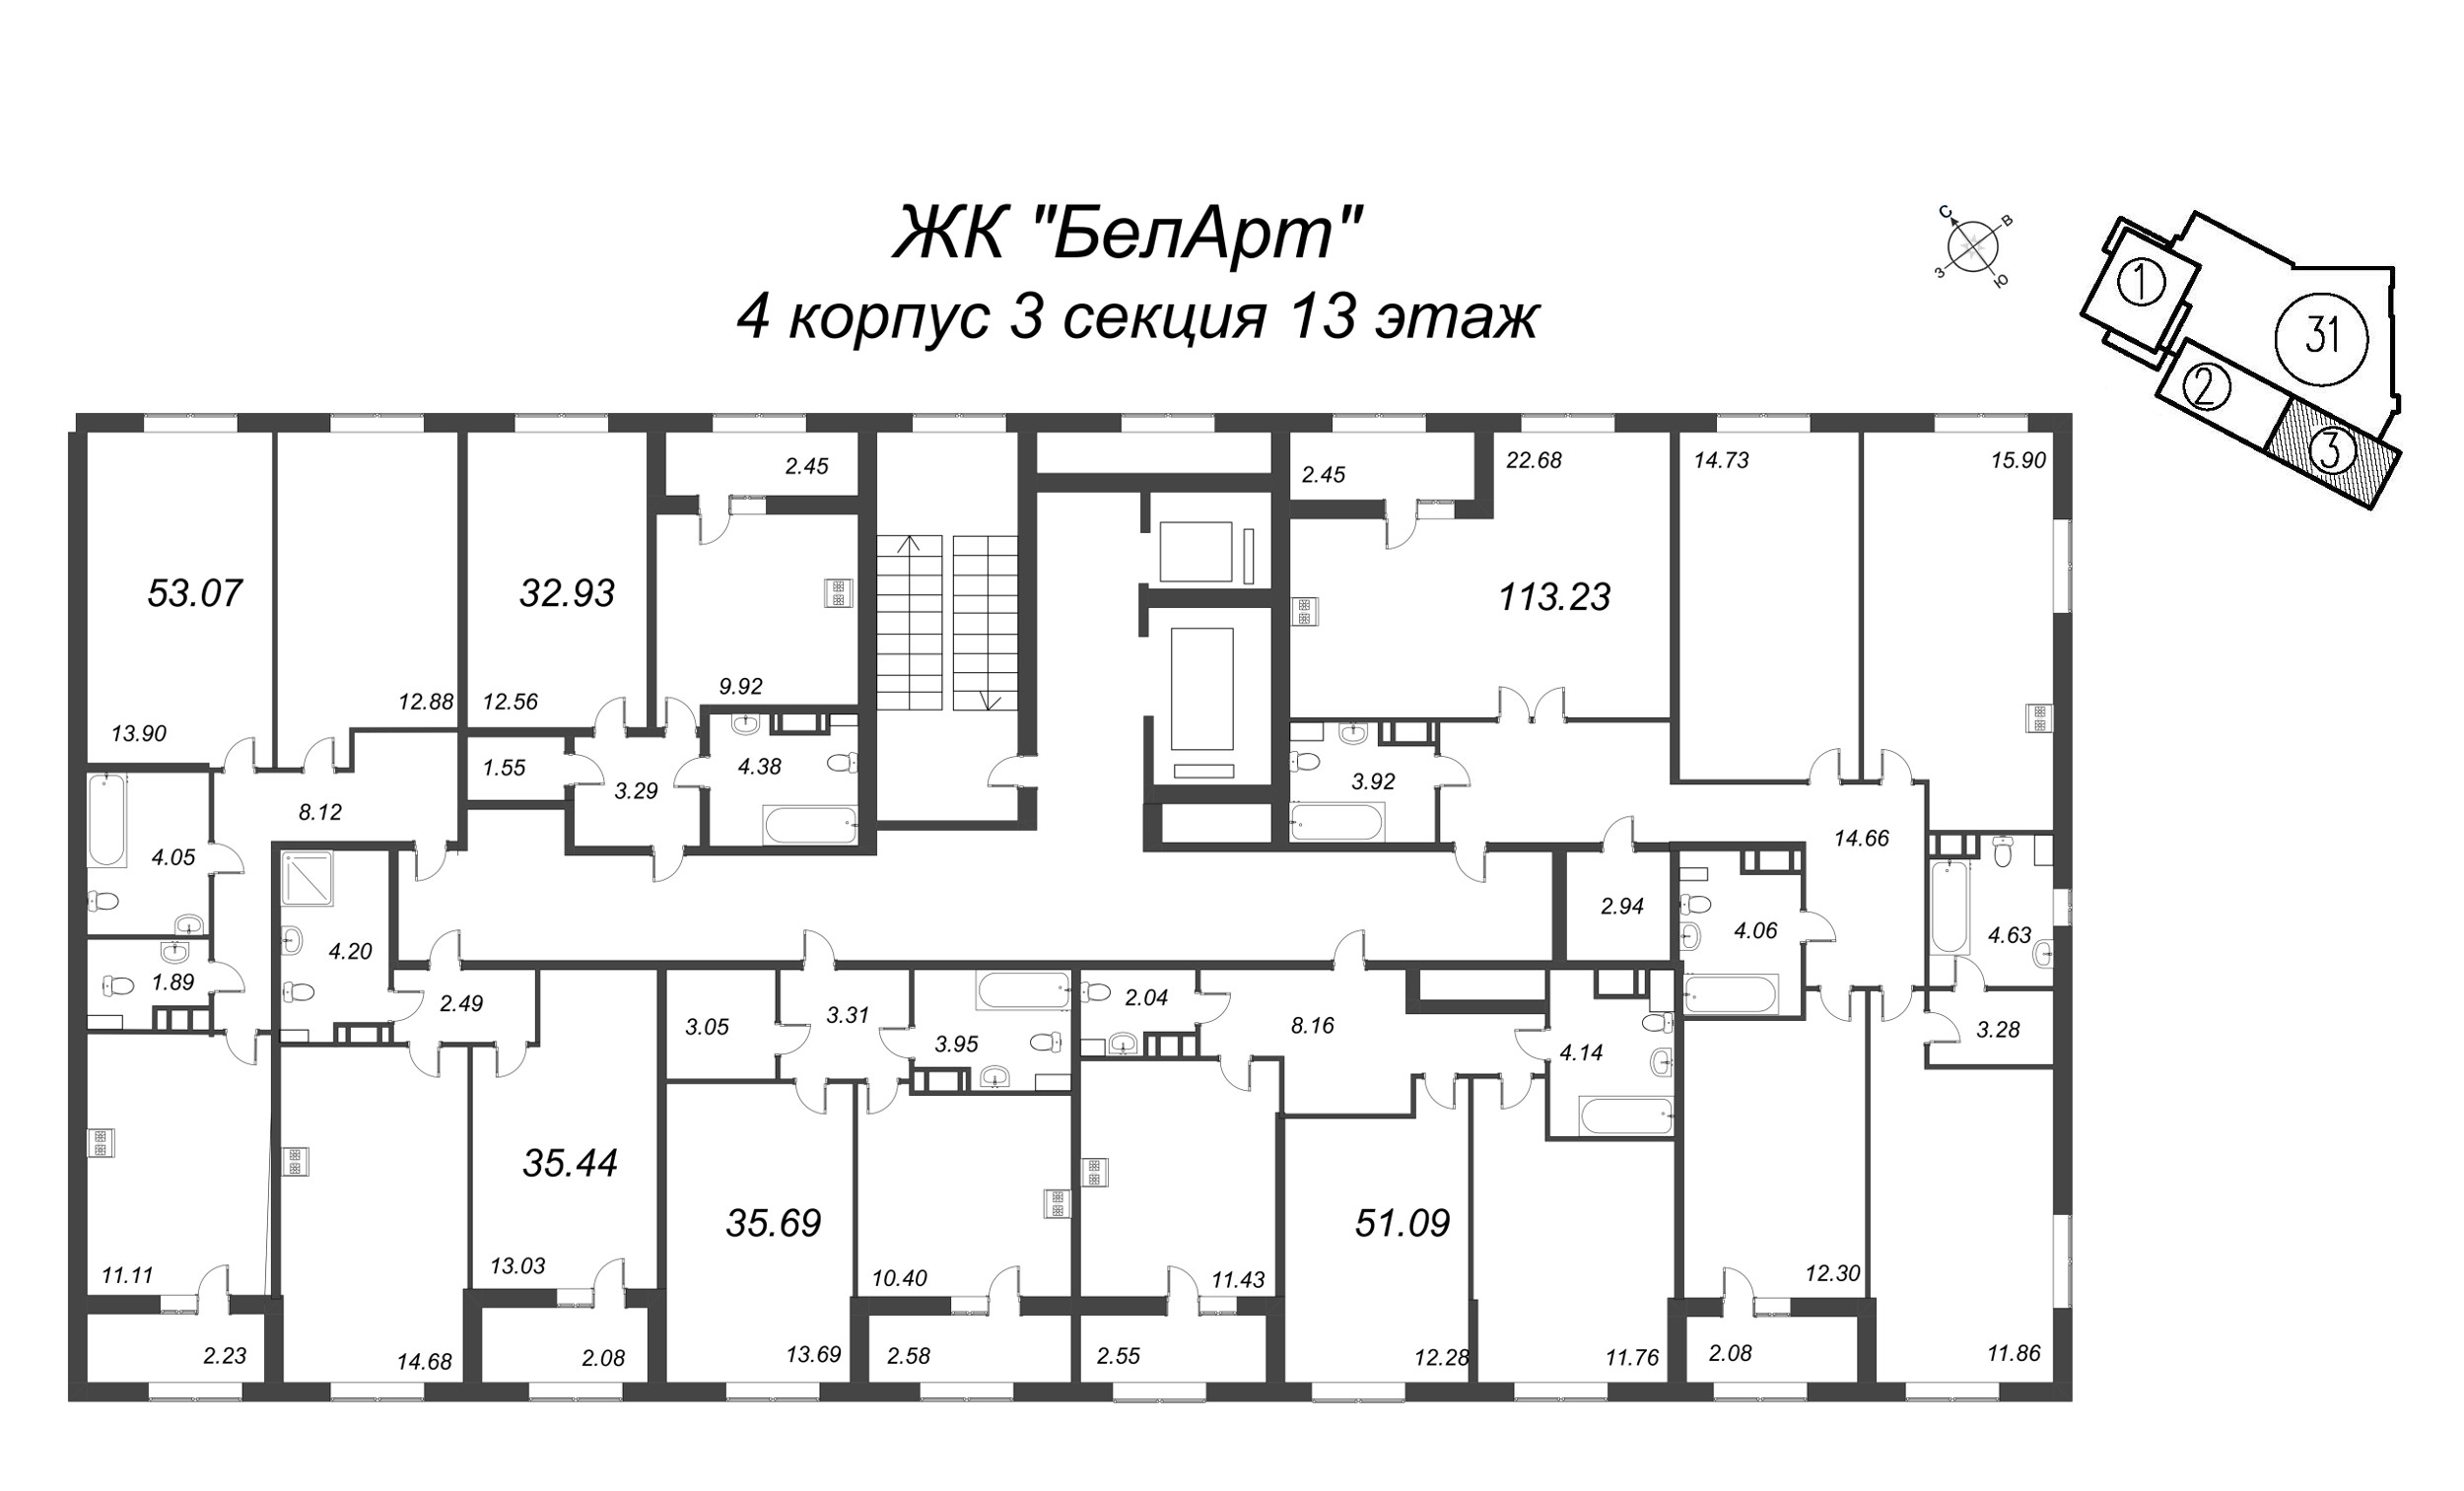 5-комнатная (Евро) квартира, 113.23 м² в ЖК "БелАрт" - планировка этажа